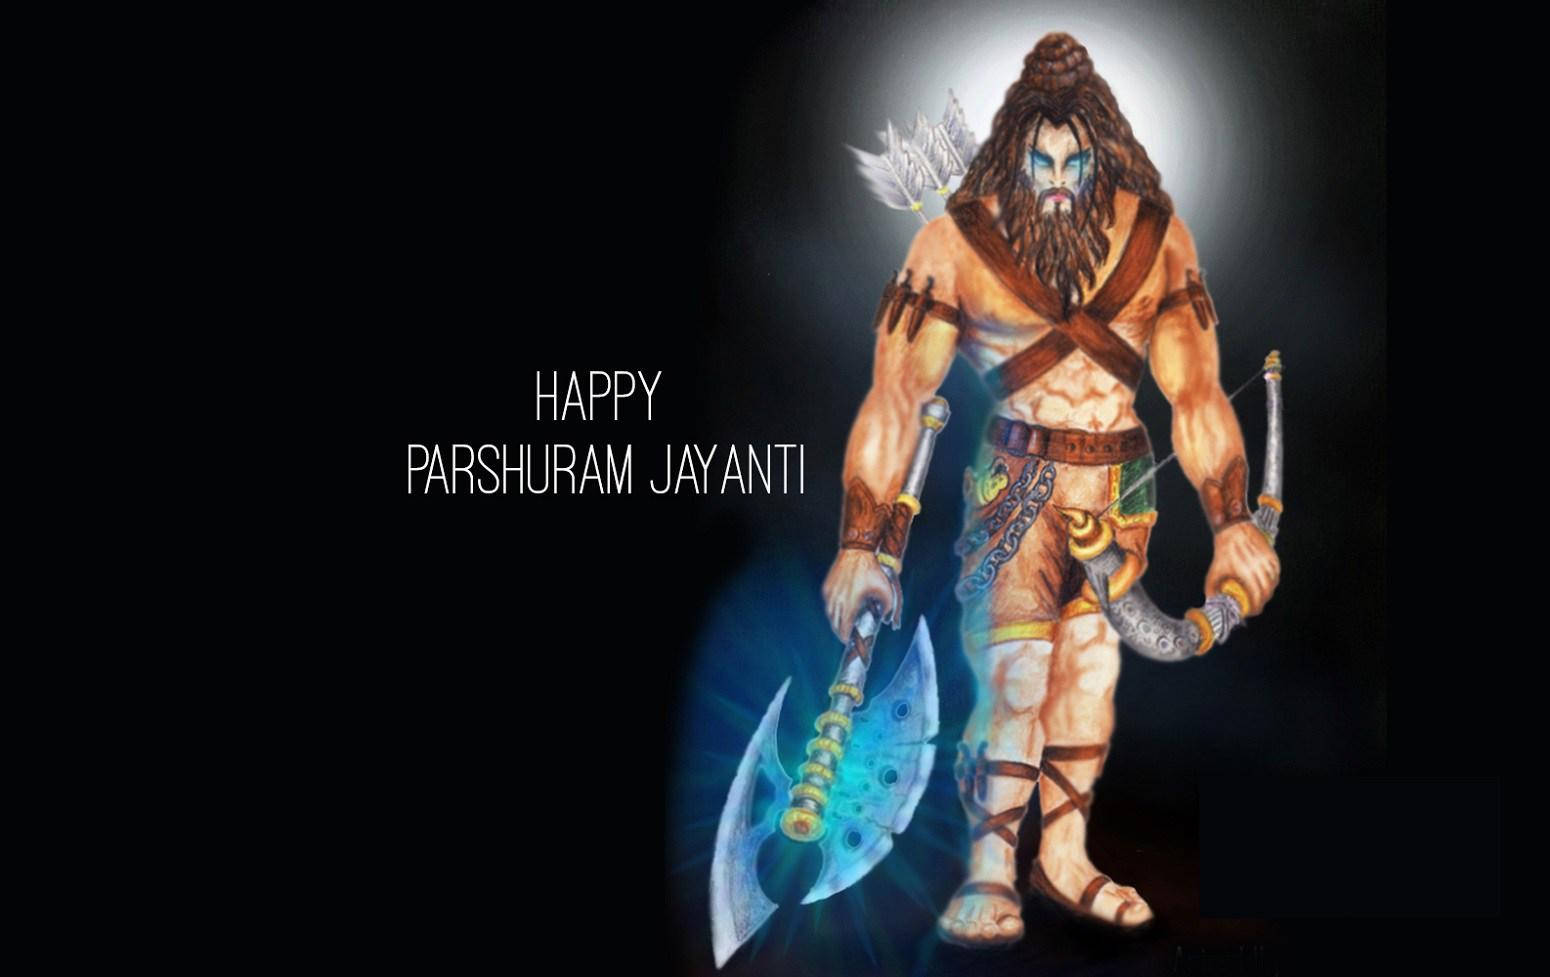 Happy Parshuram Jayanti Wallpaper